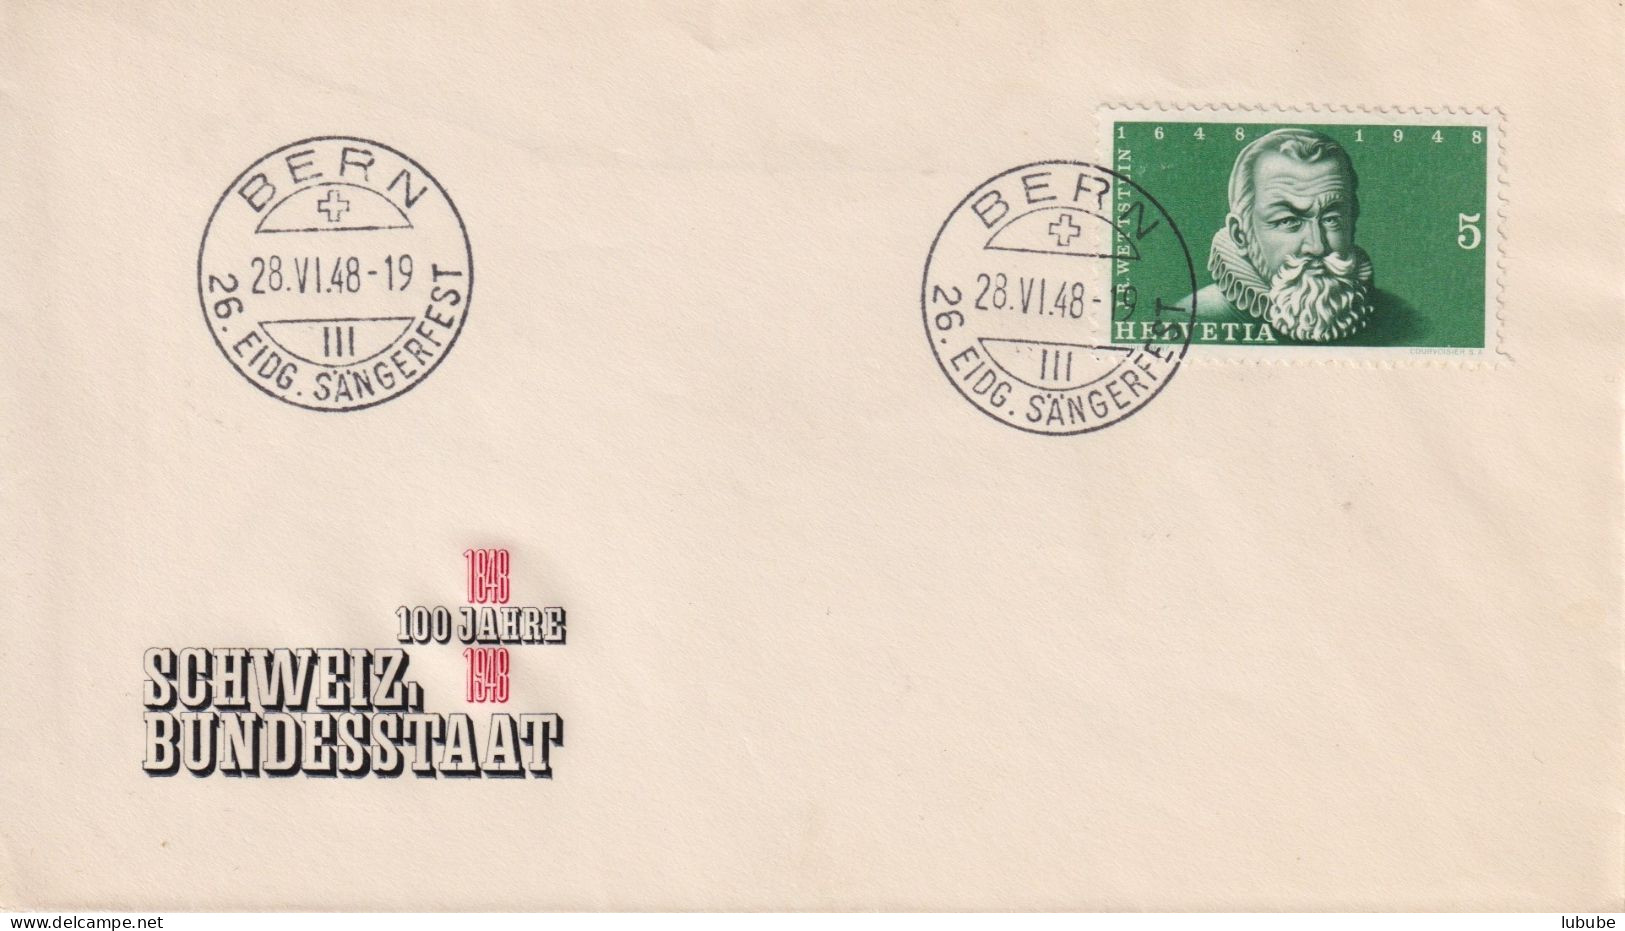 Sonderstempel  "26.Eidg.Sängerfest, Bern"       1948 - Briefe U. Dokumente